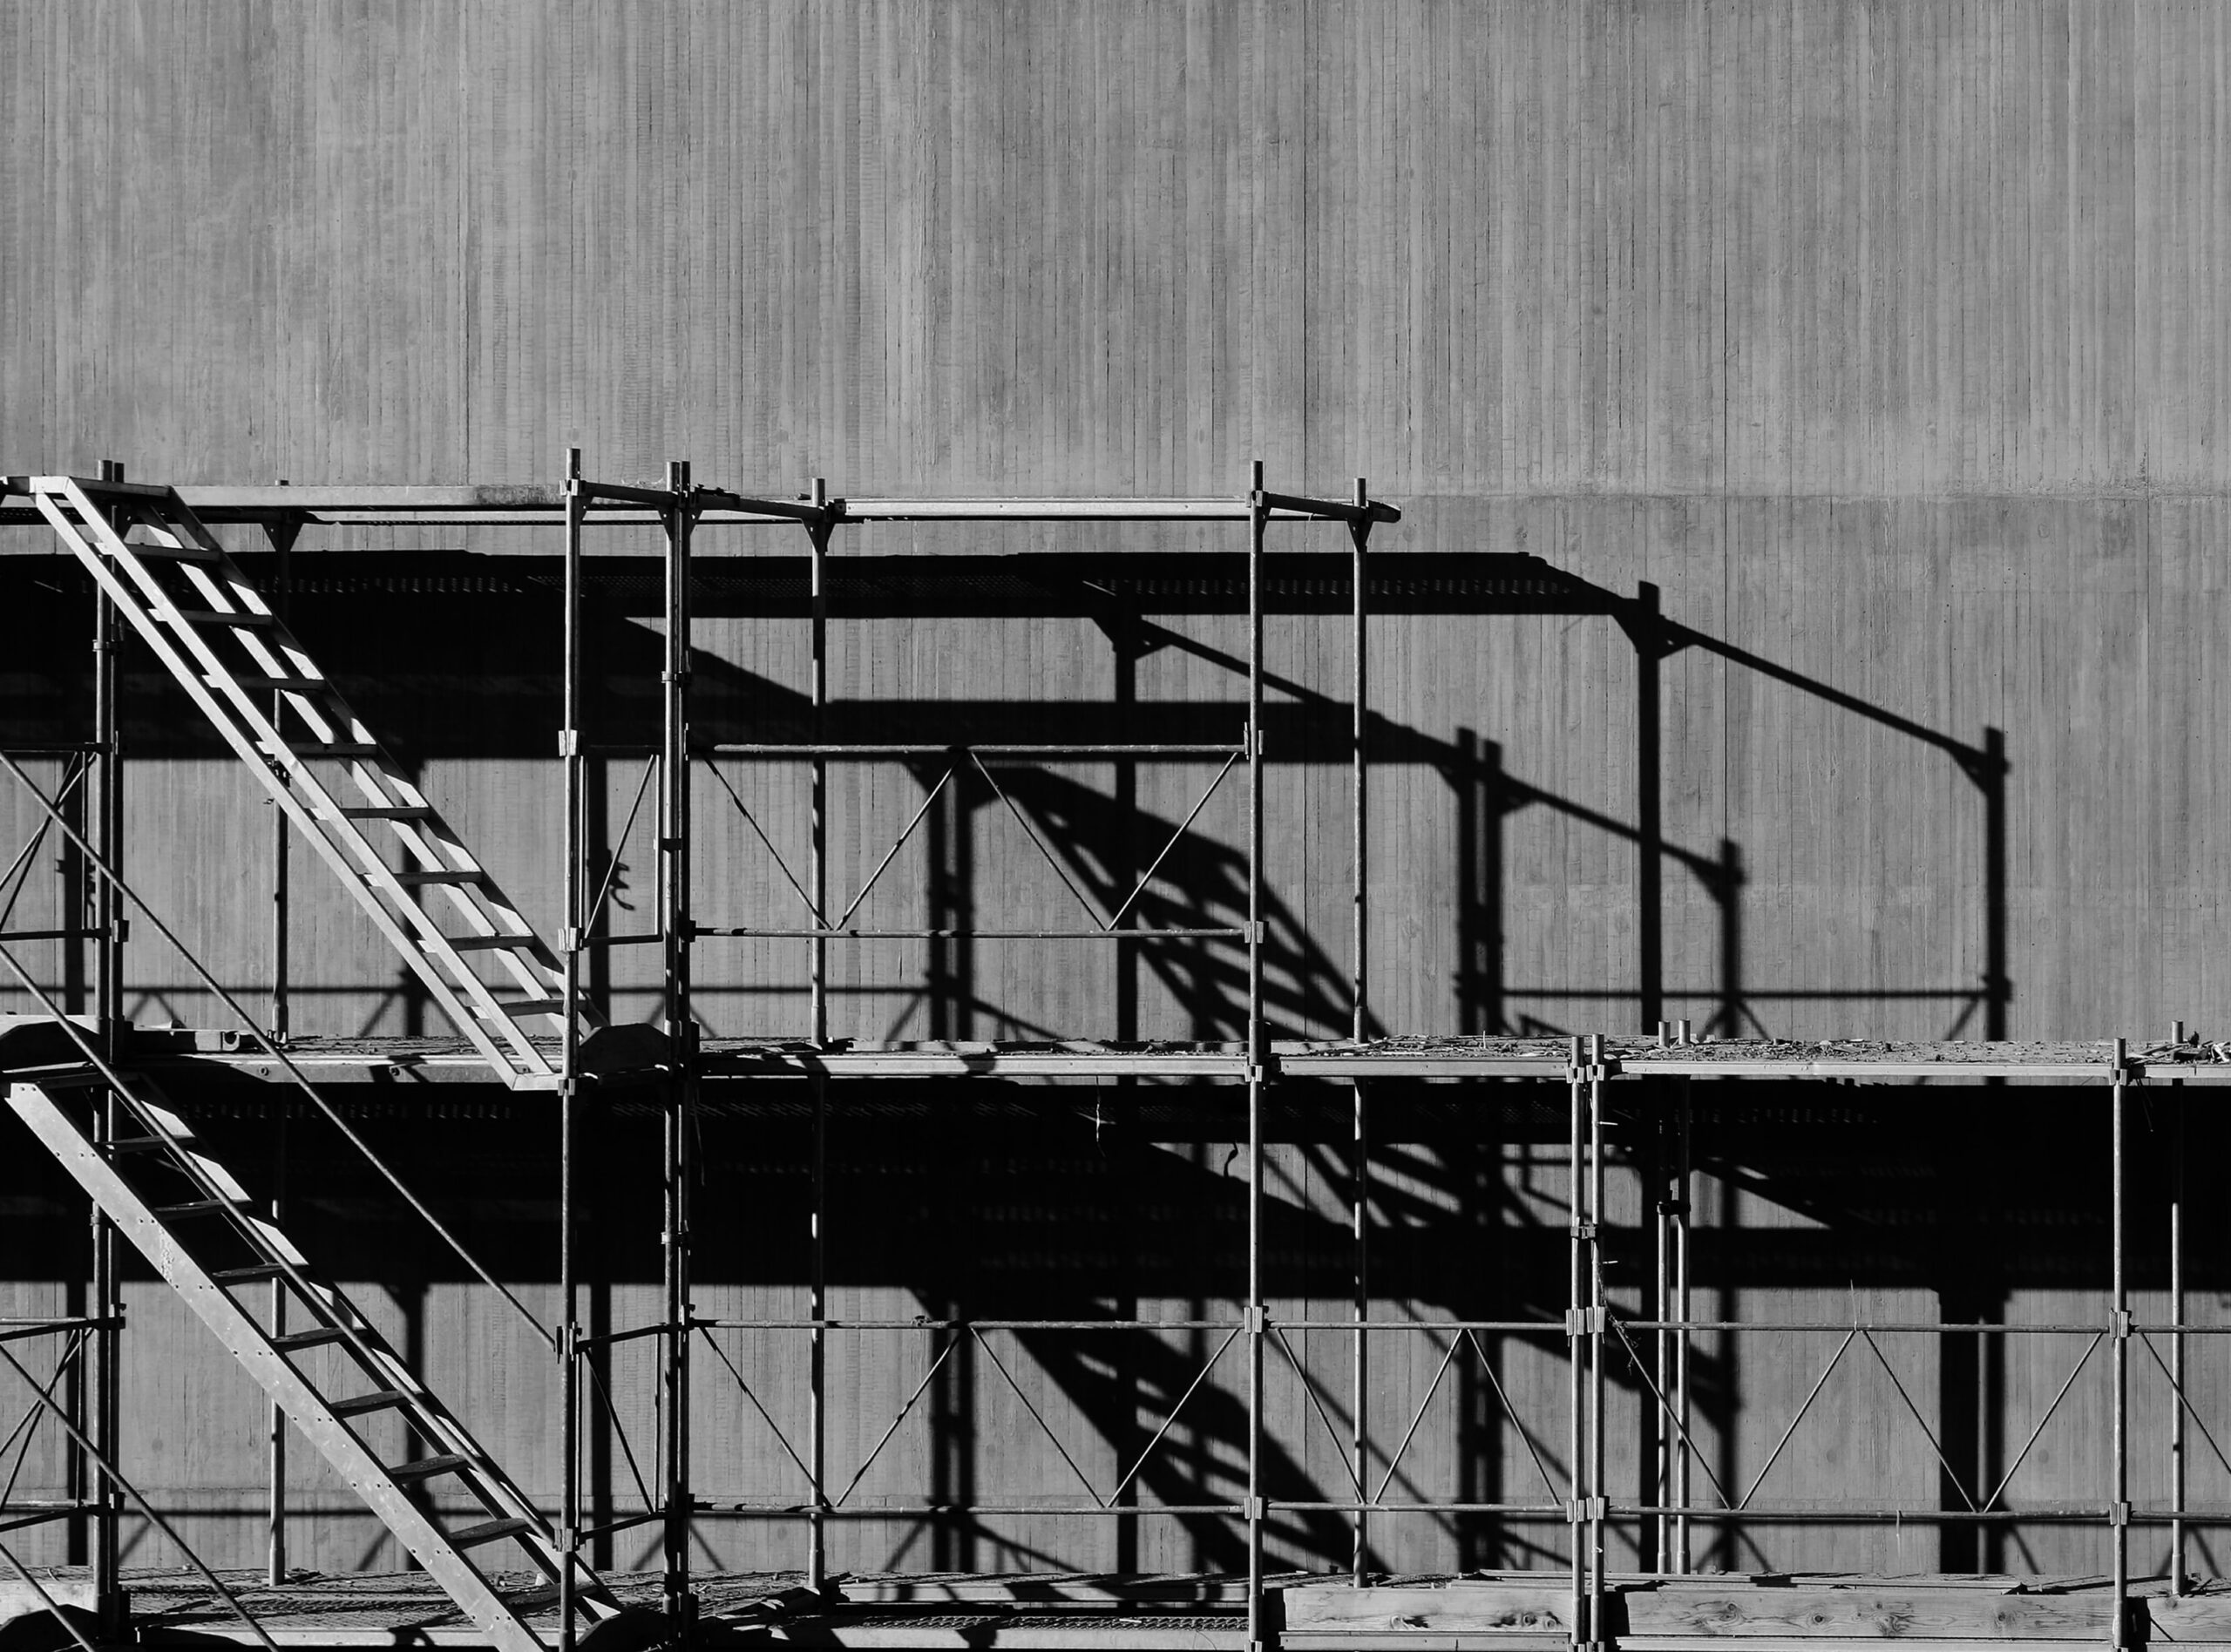 public liability insurance for scaffolders - image of scaffolding